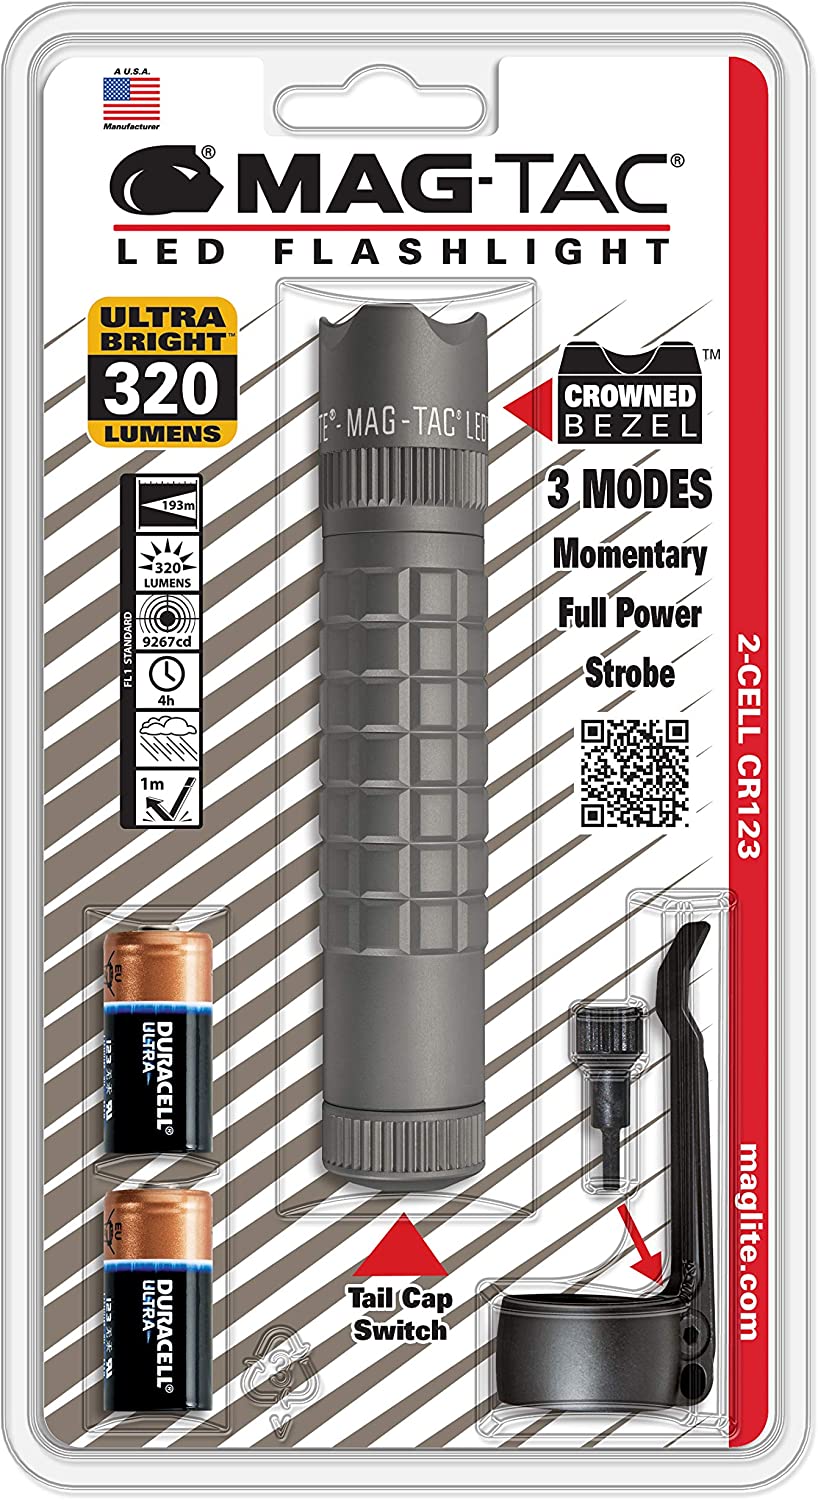 MAGLITE MAG-TAC CR123 LED Flashlight Crowned Bezel, Urban Grey #SG2LRC6